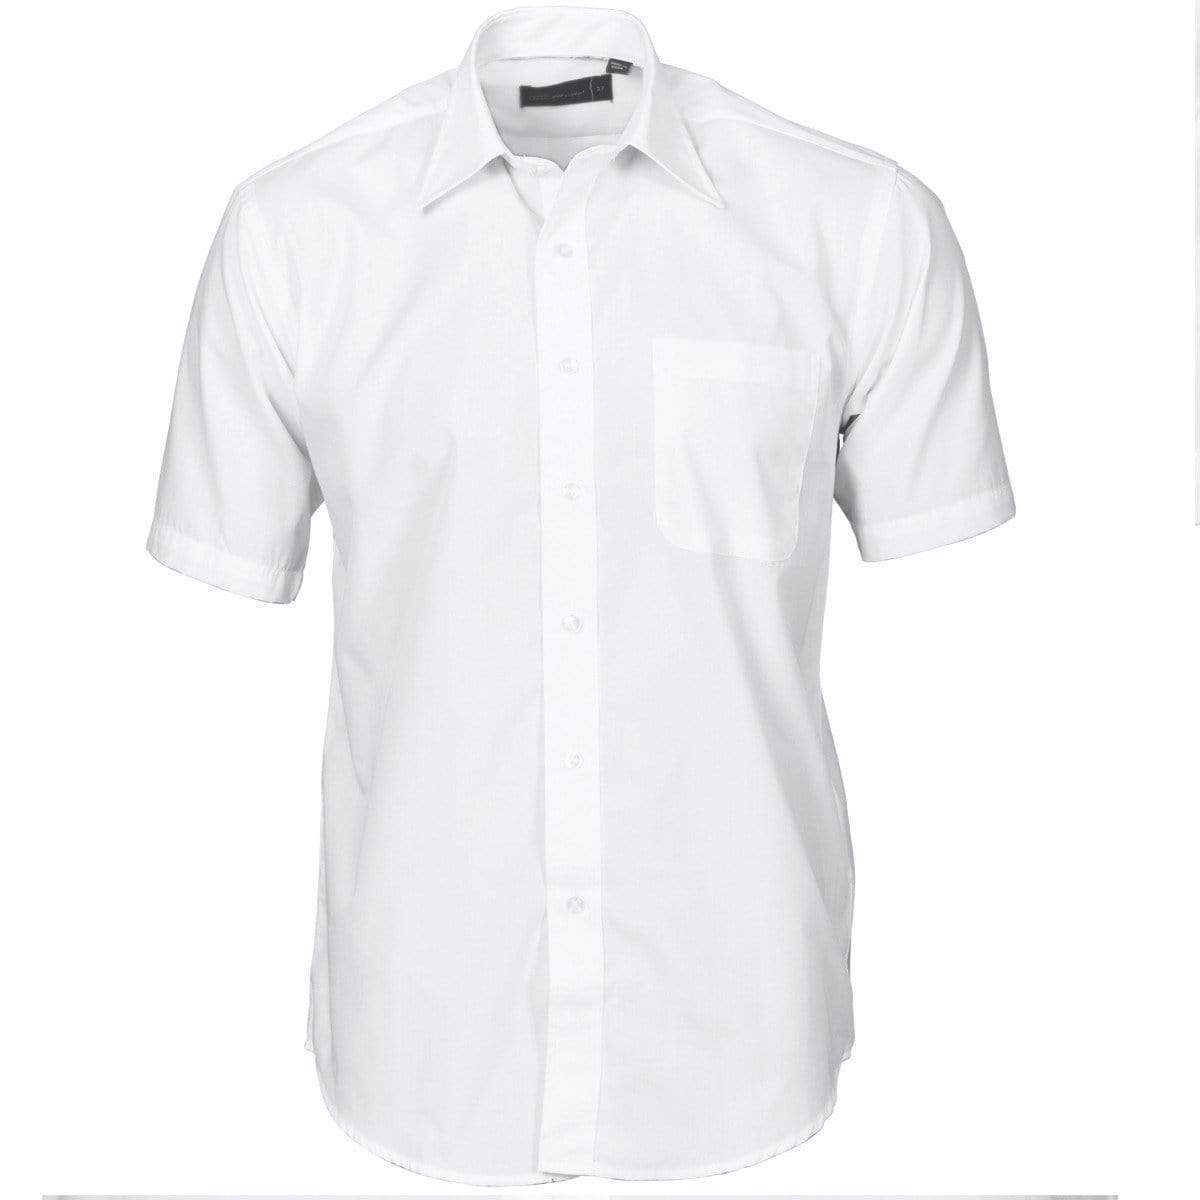 Dnc Workwear Polyester Cotton Short Sleeve Business Shirt - 4131 Corporate Wear DNC Workwear White S 